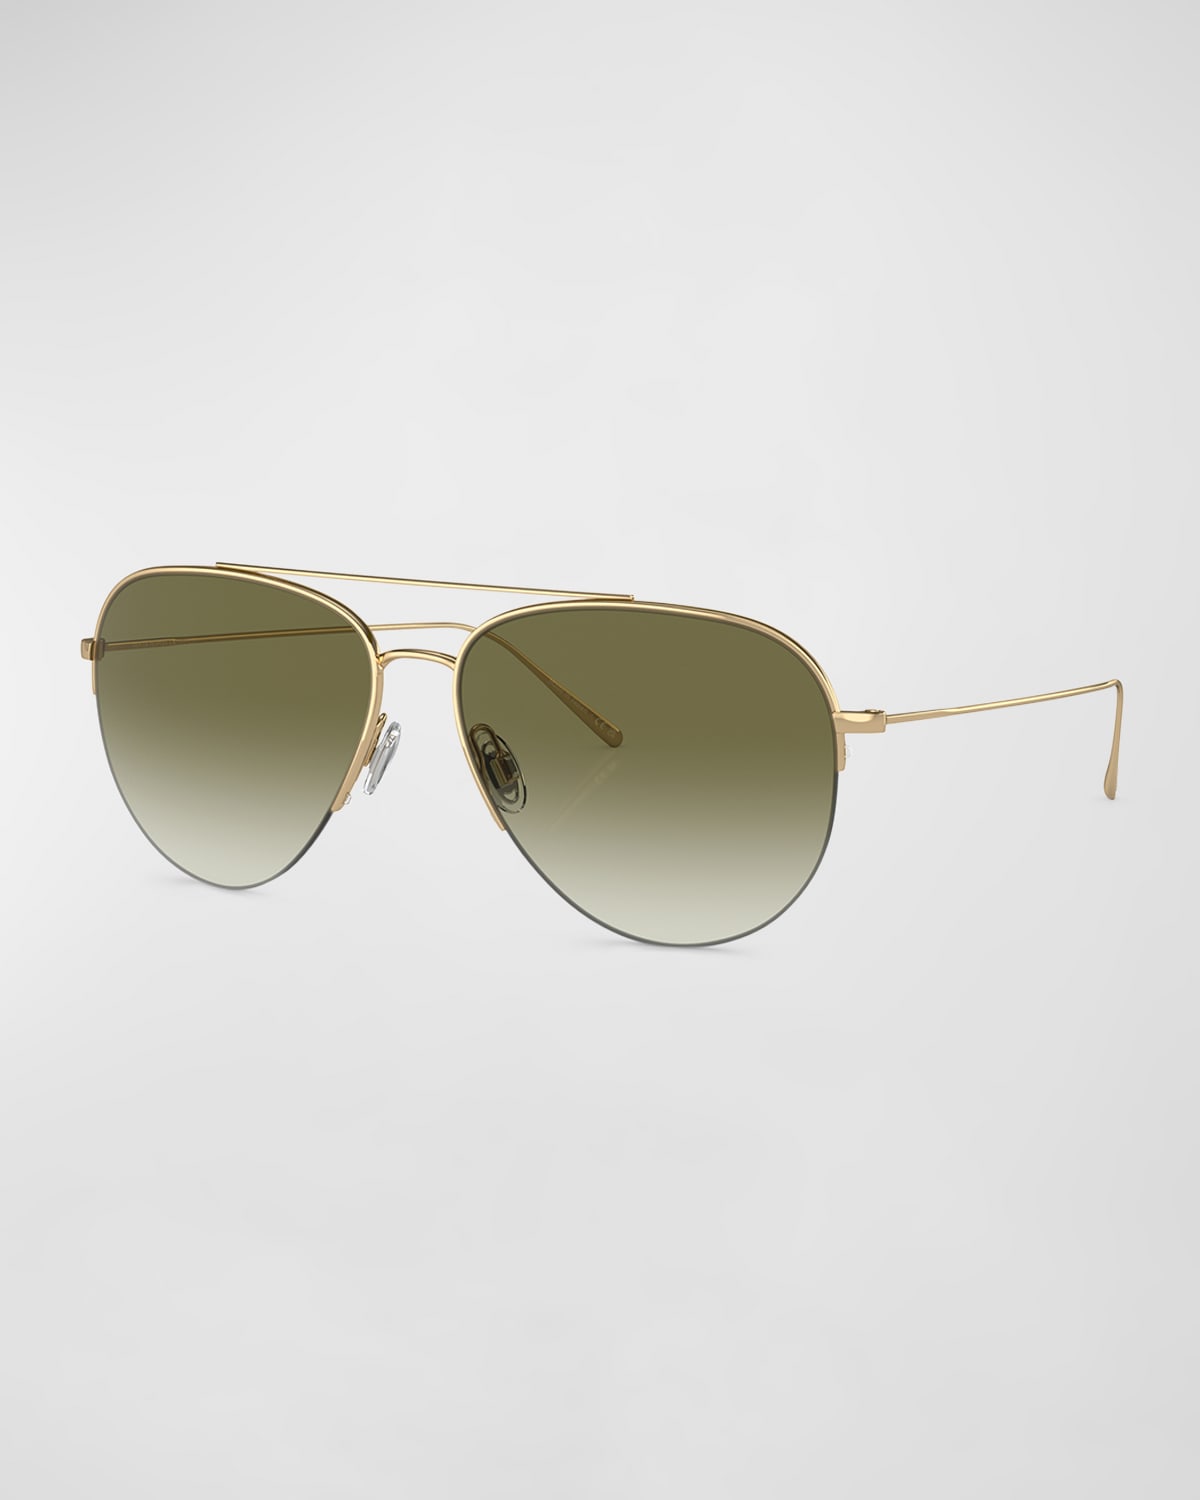 Cleamons Titanium Aviator Sunglasses